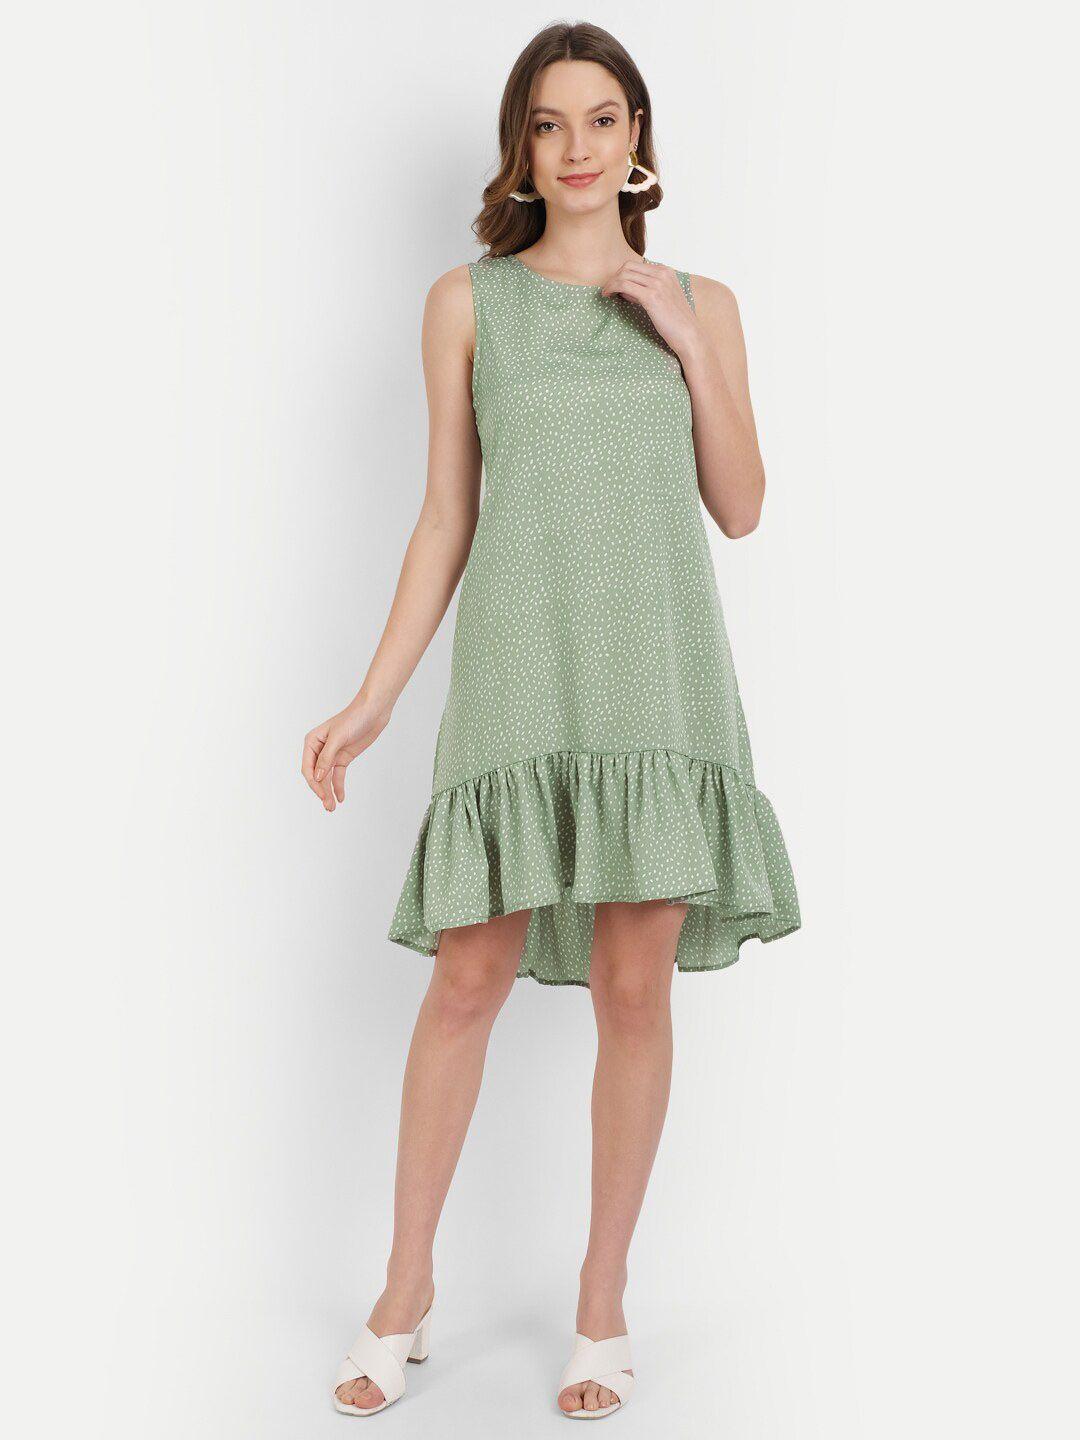 rediscover fashion women green crepe a-line polka dot frill dress